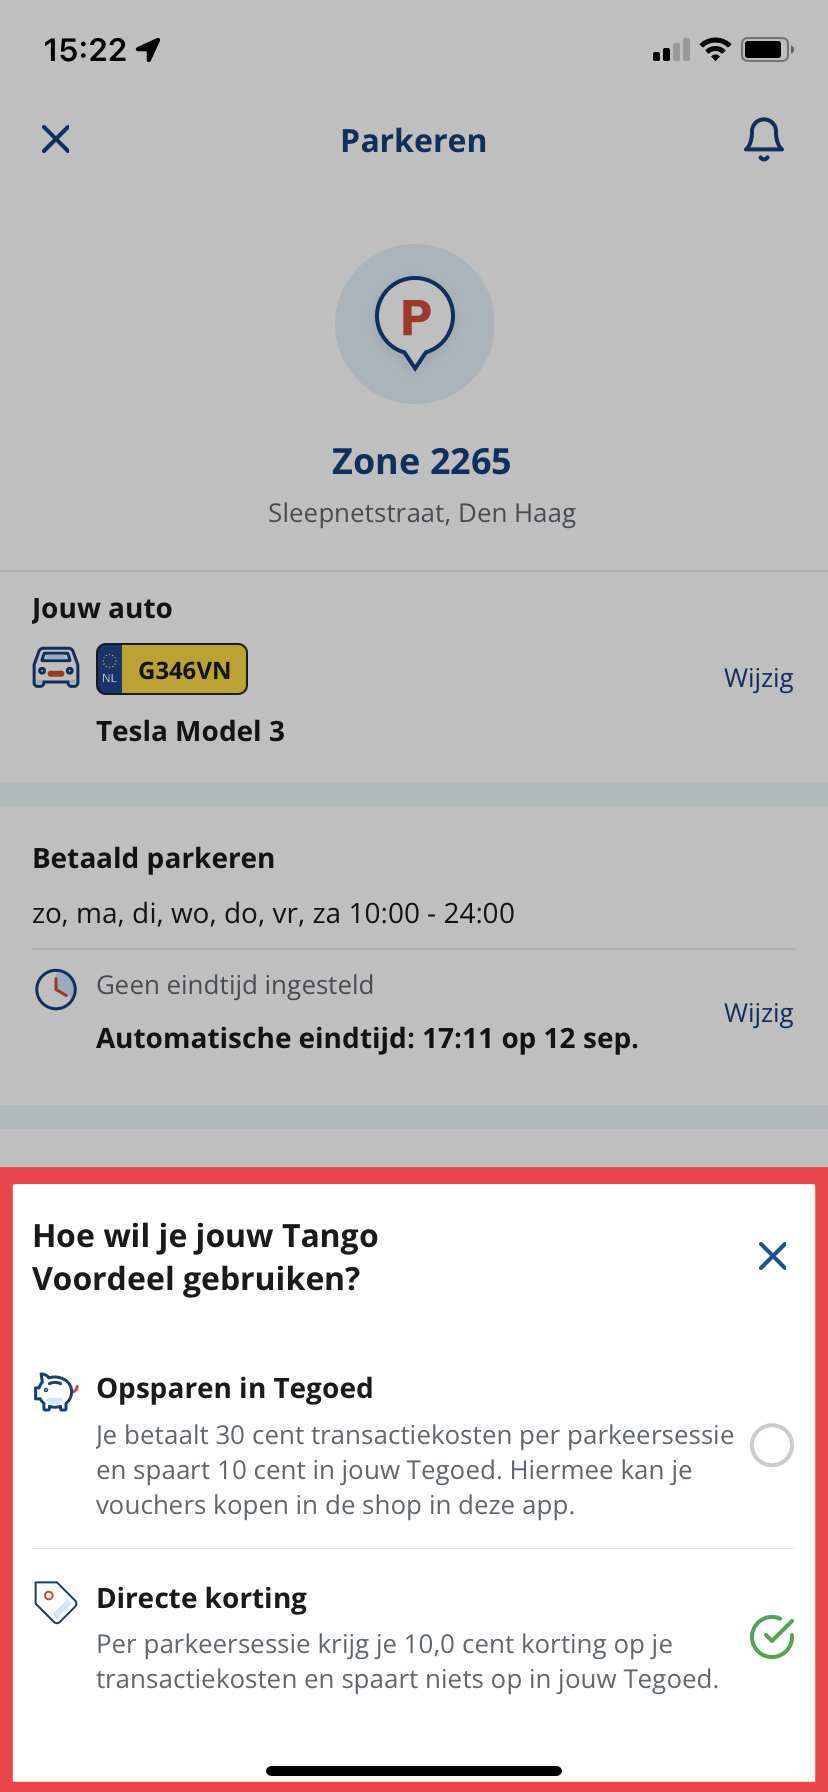 Tango_Parkeren_startscherm_korting_vs_sparen_scherm_2.jpeg